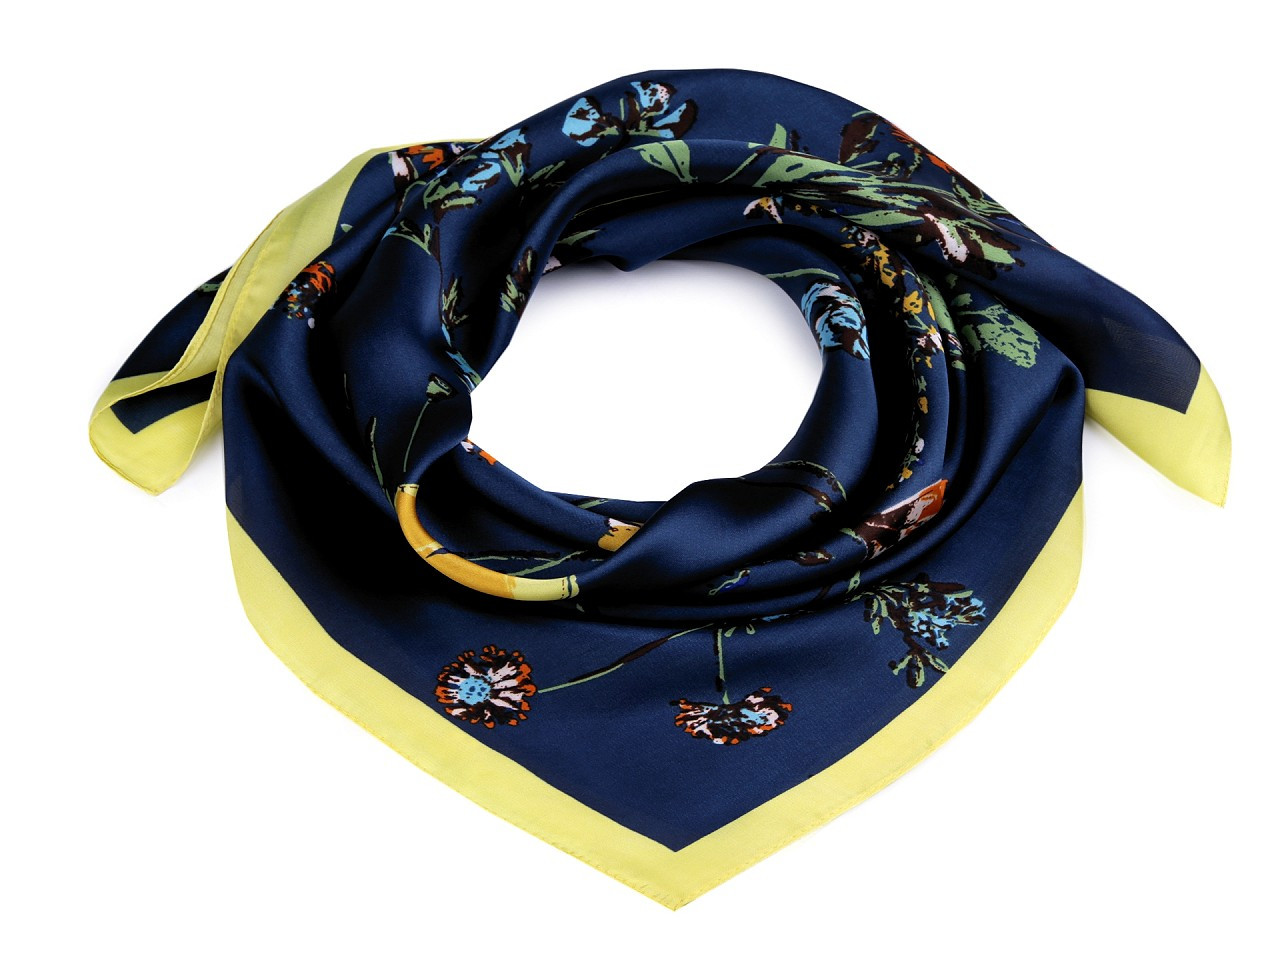 Saténový šátek květy 70x70 cm, barva 2 modrá tmavá žlutá